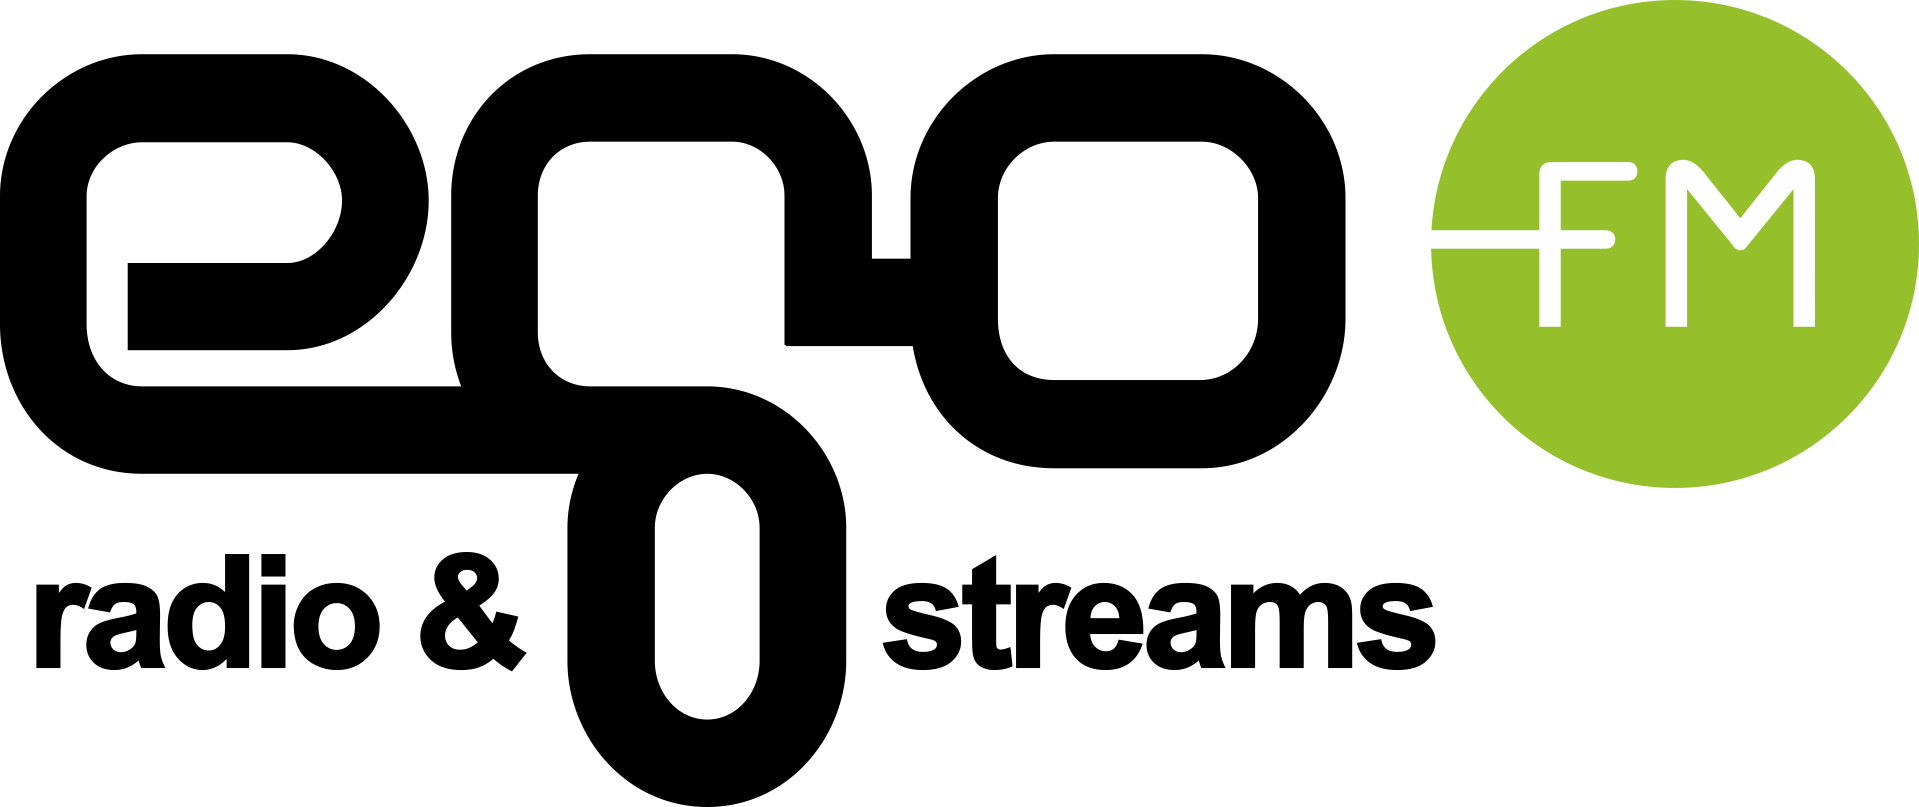 egoFM-logo-2016-RZ-4c-black.png